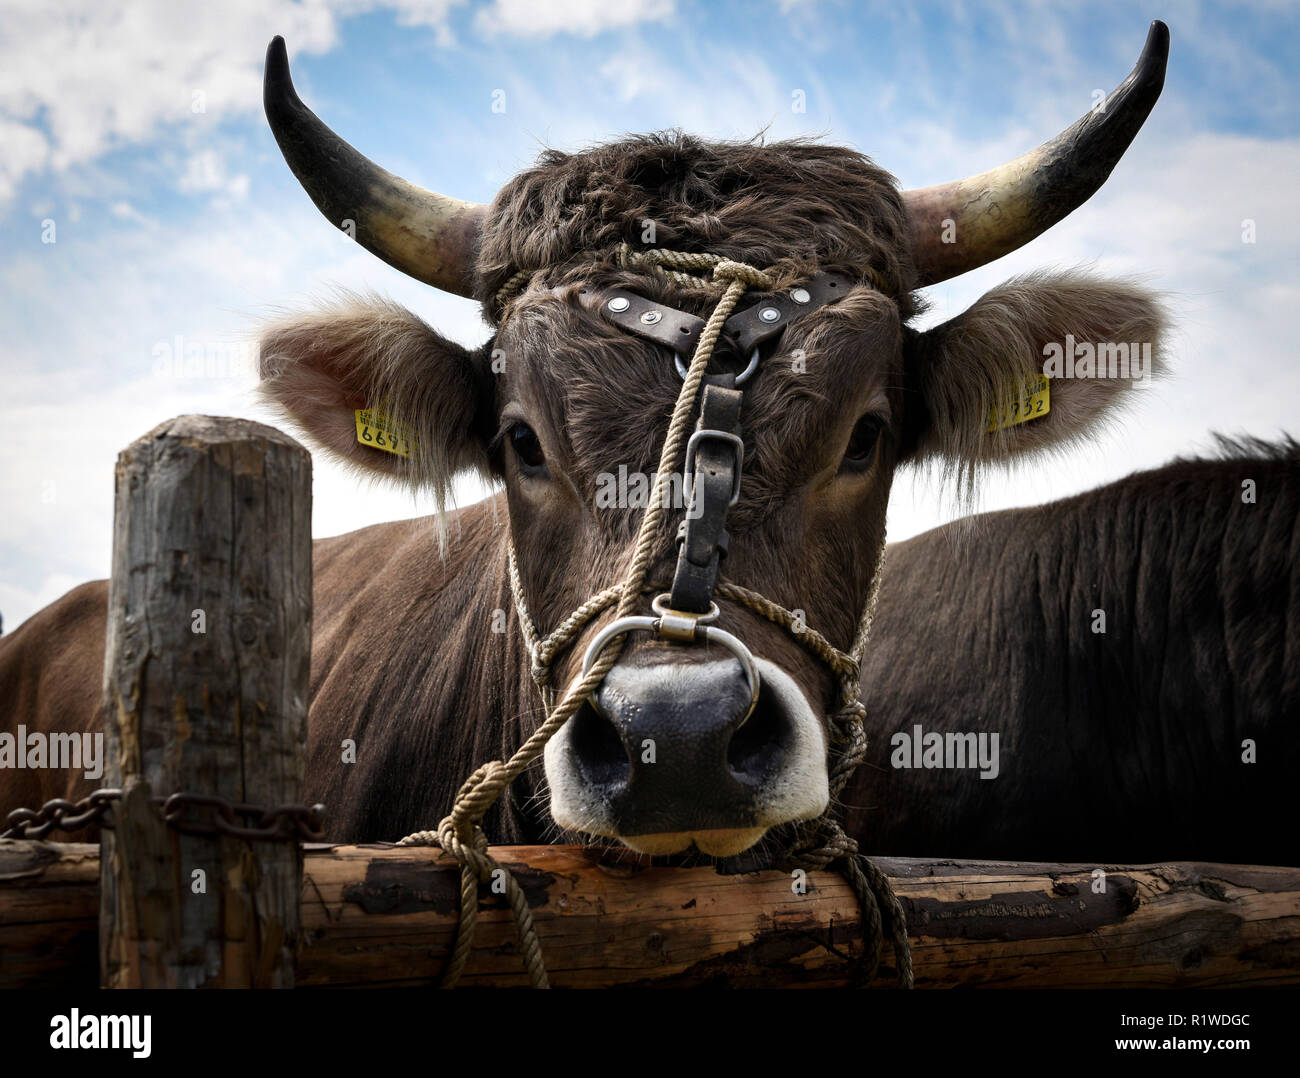 Bull, animal portrait, Bull market, Zug, Switzerland Stock Photo